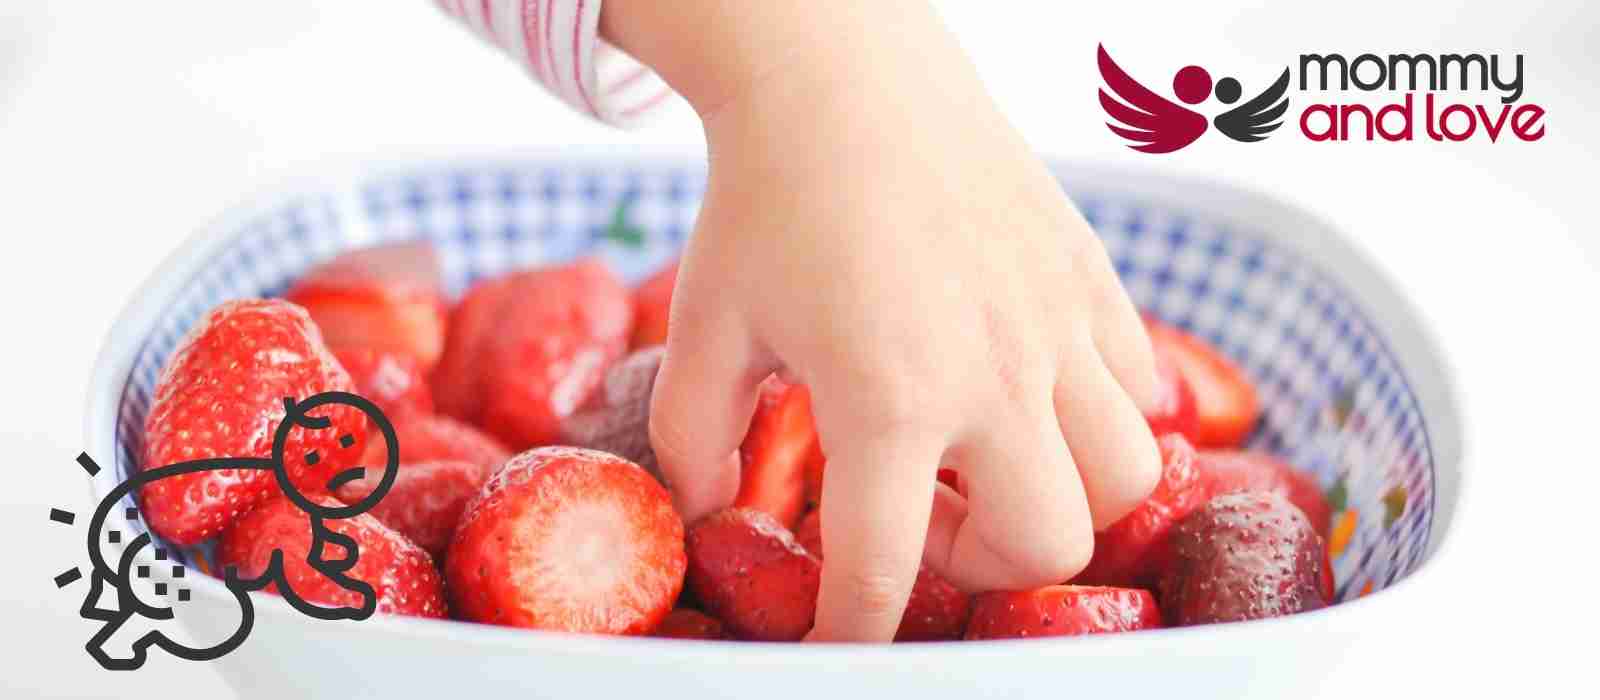 Can Strawberries Cause Diaper Rash